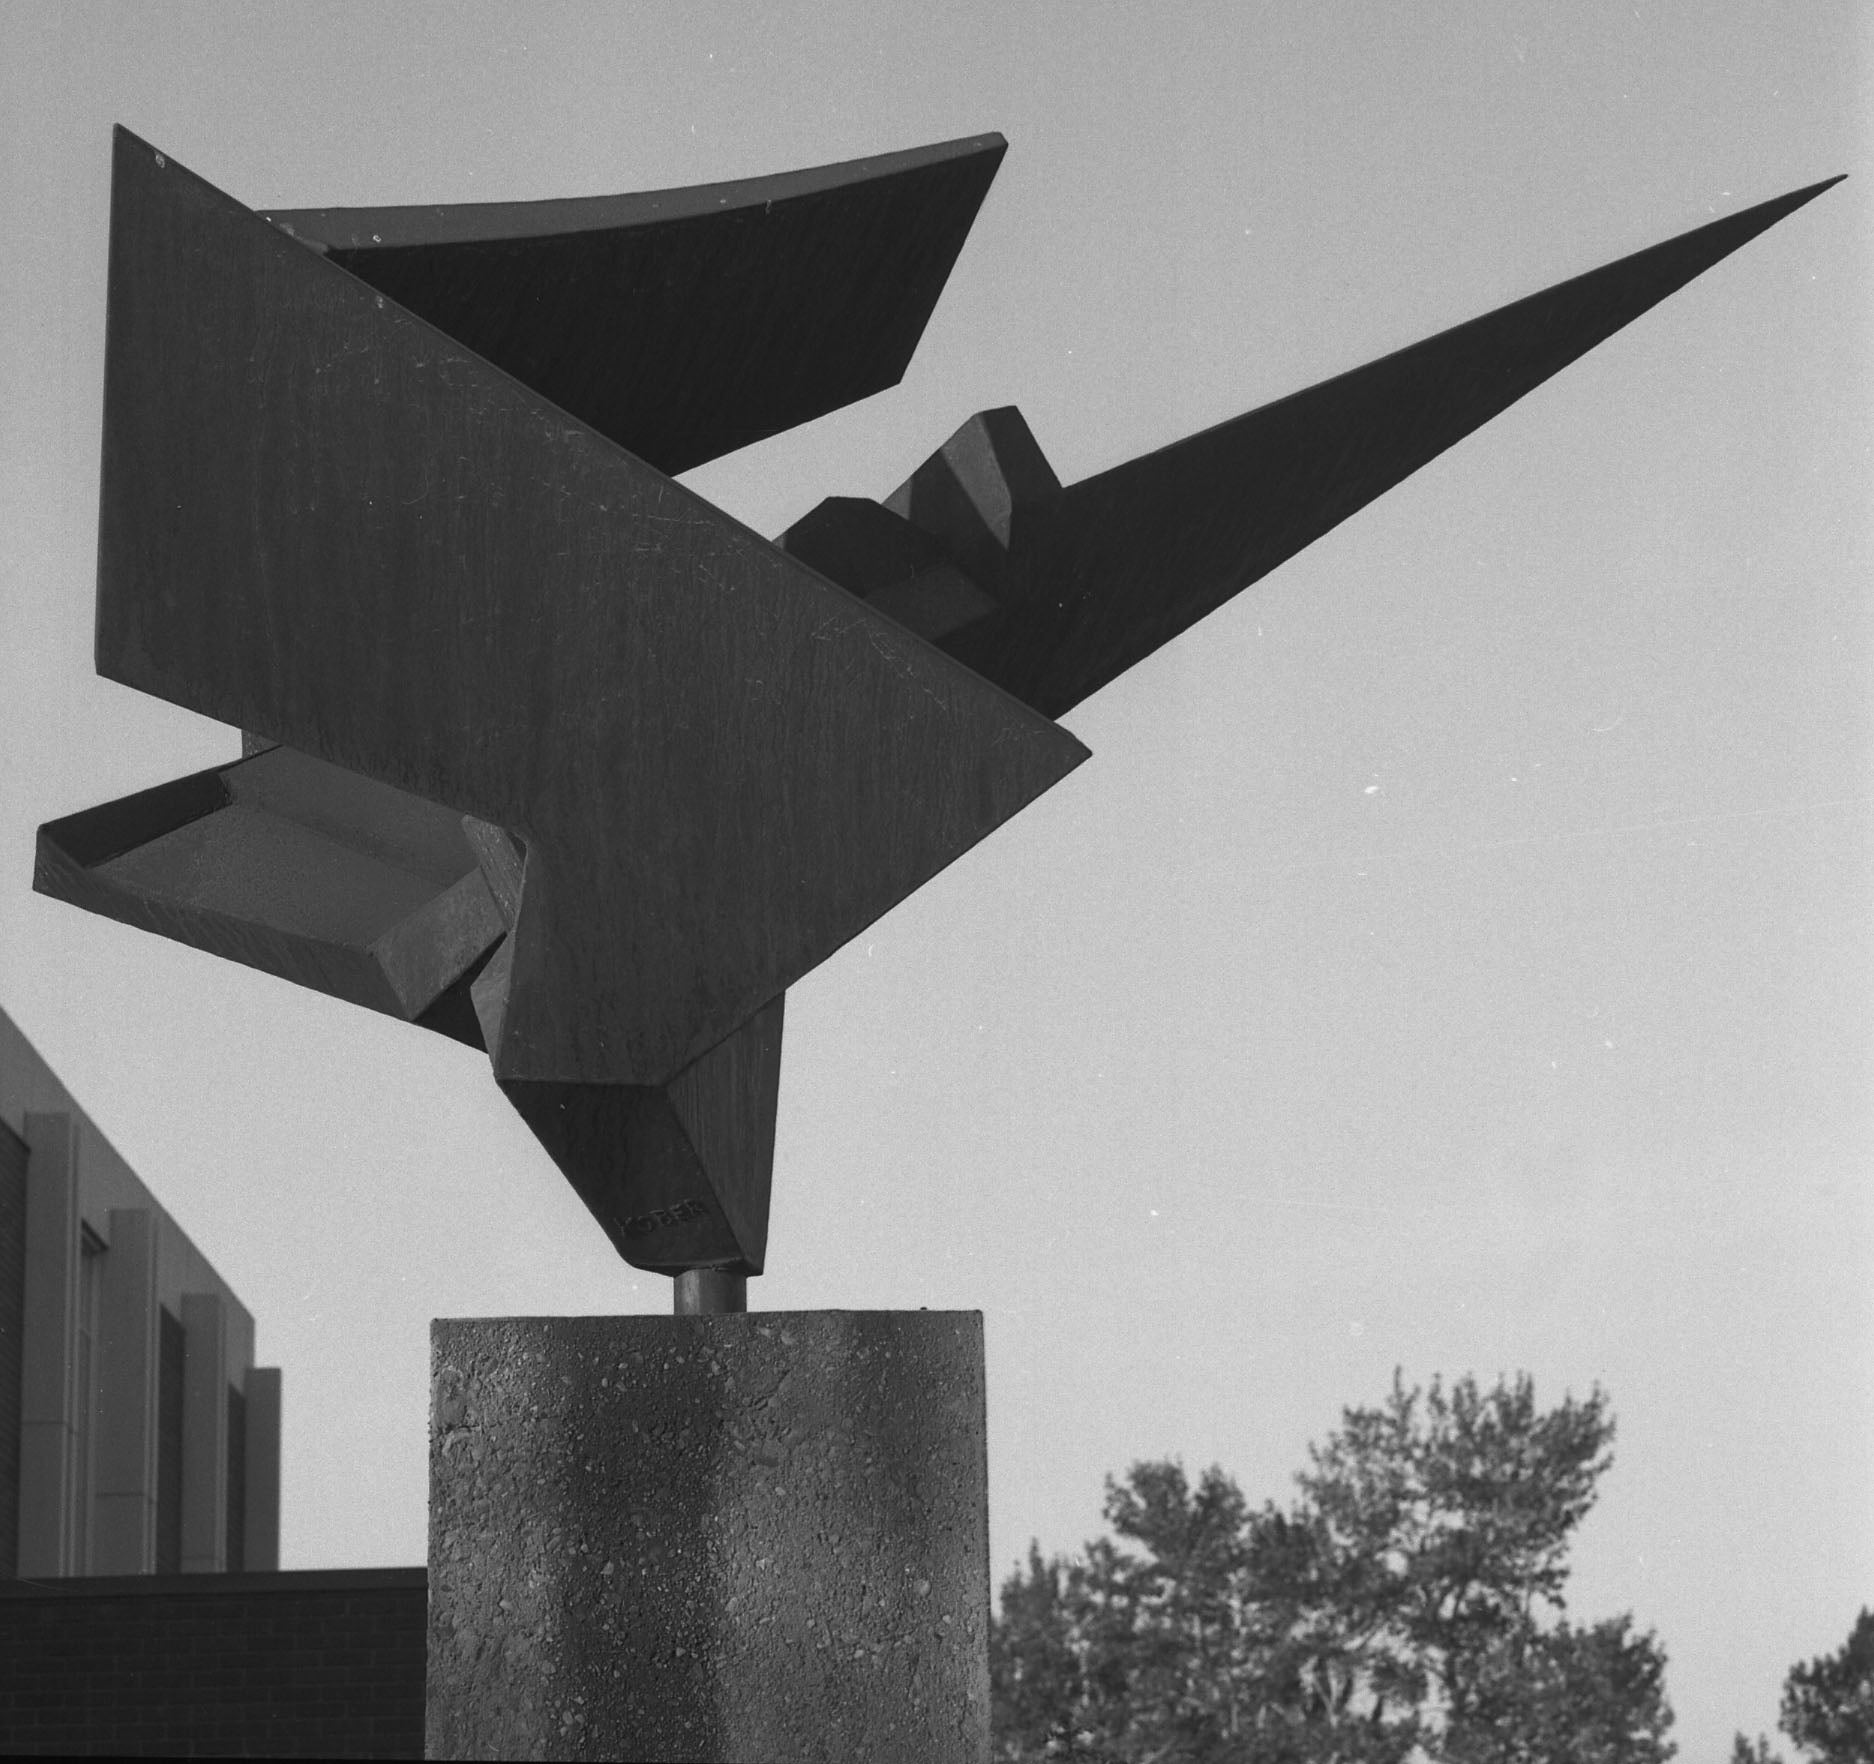 Metal sculpture designed to look like a bird in flight